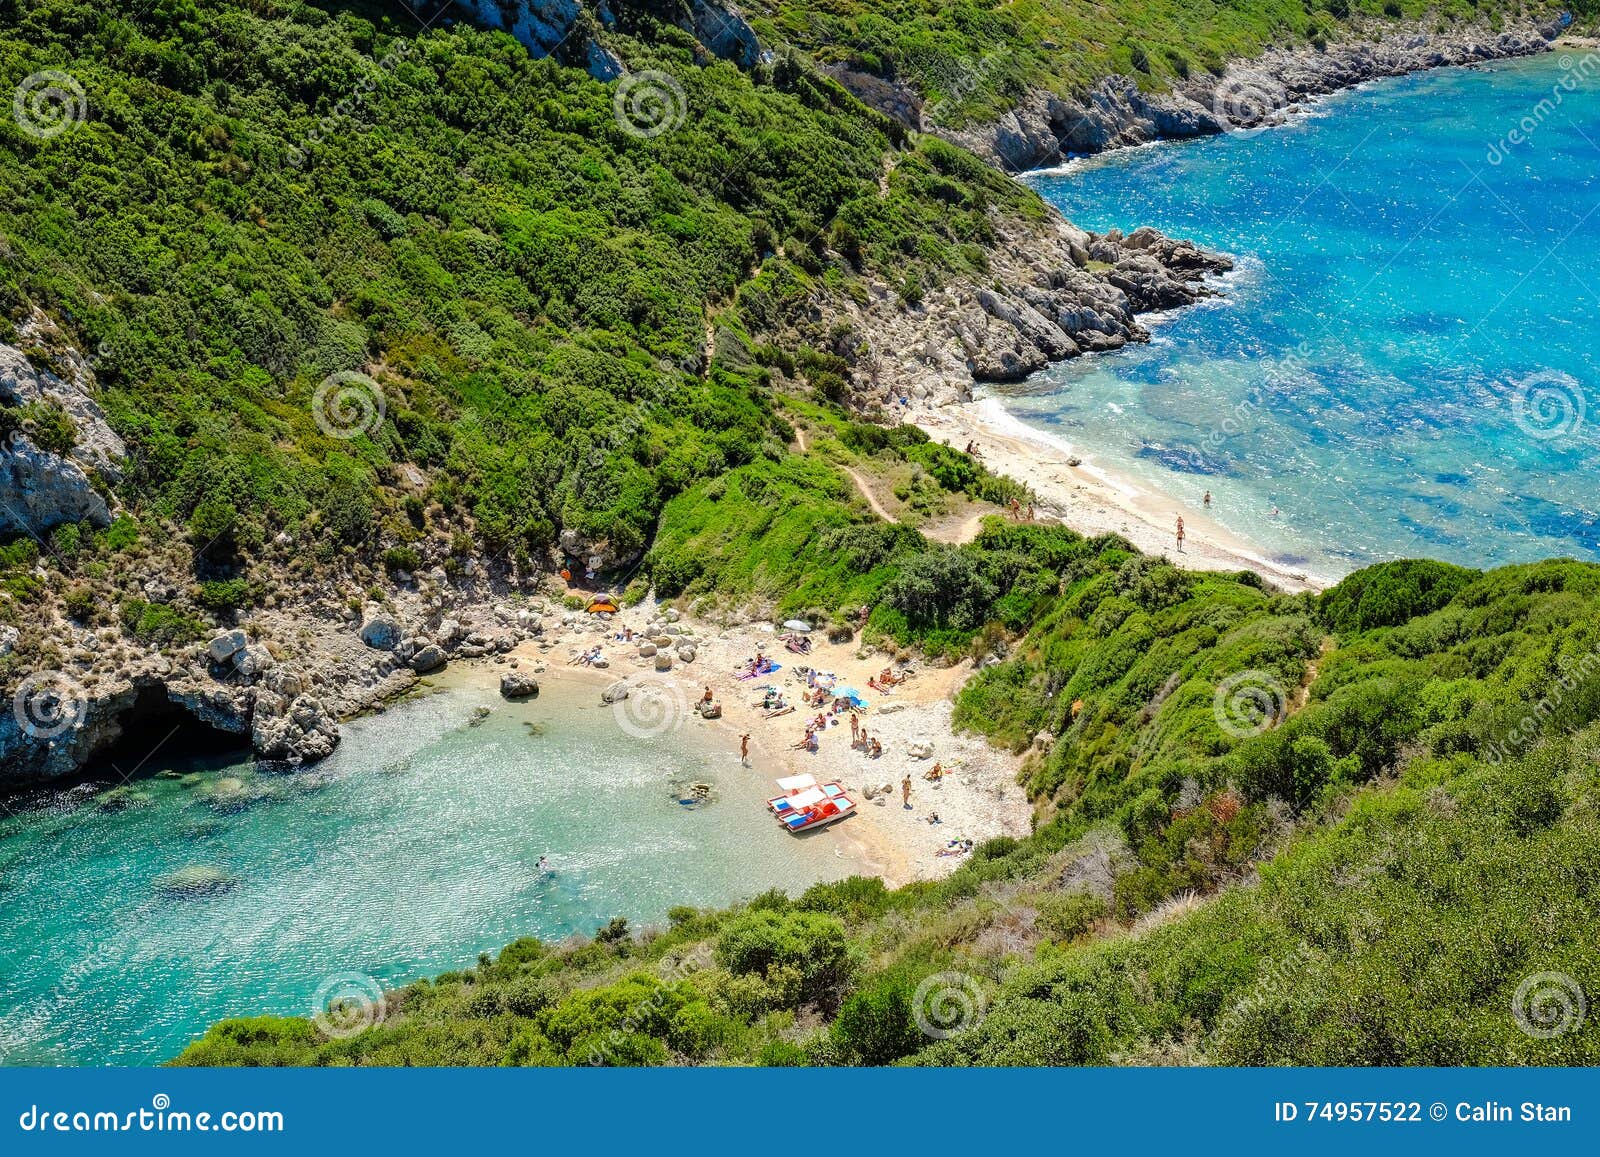 porto timoni, the most famous and beautifull beach in corfu